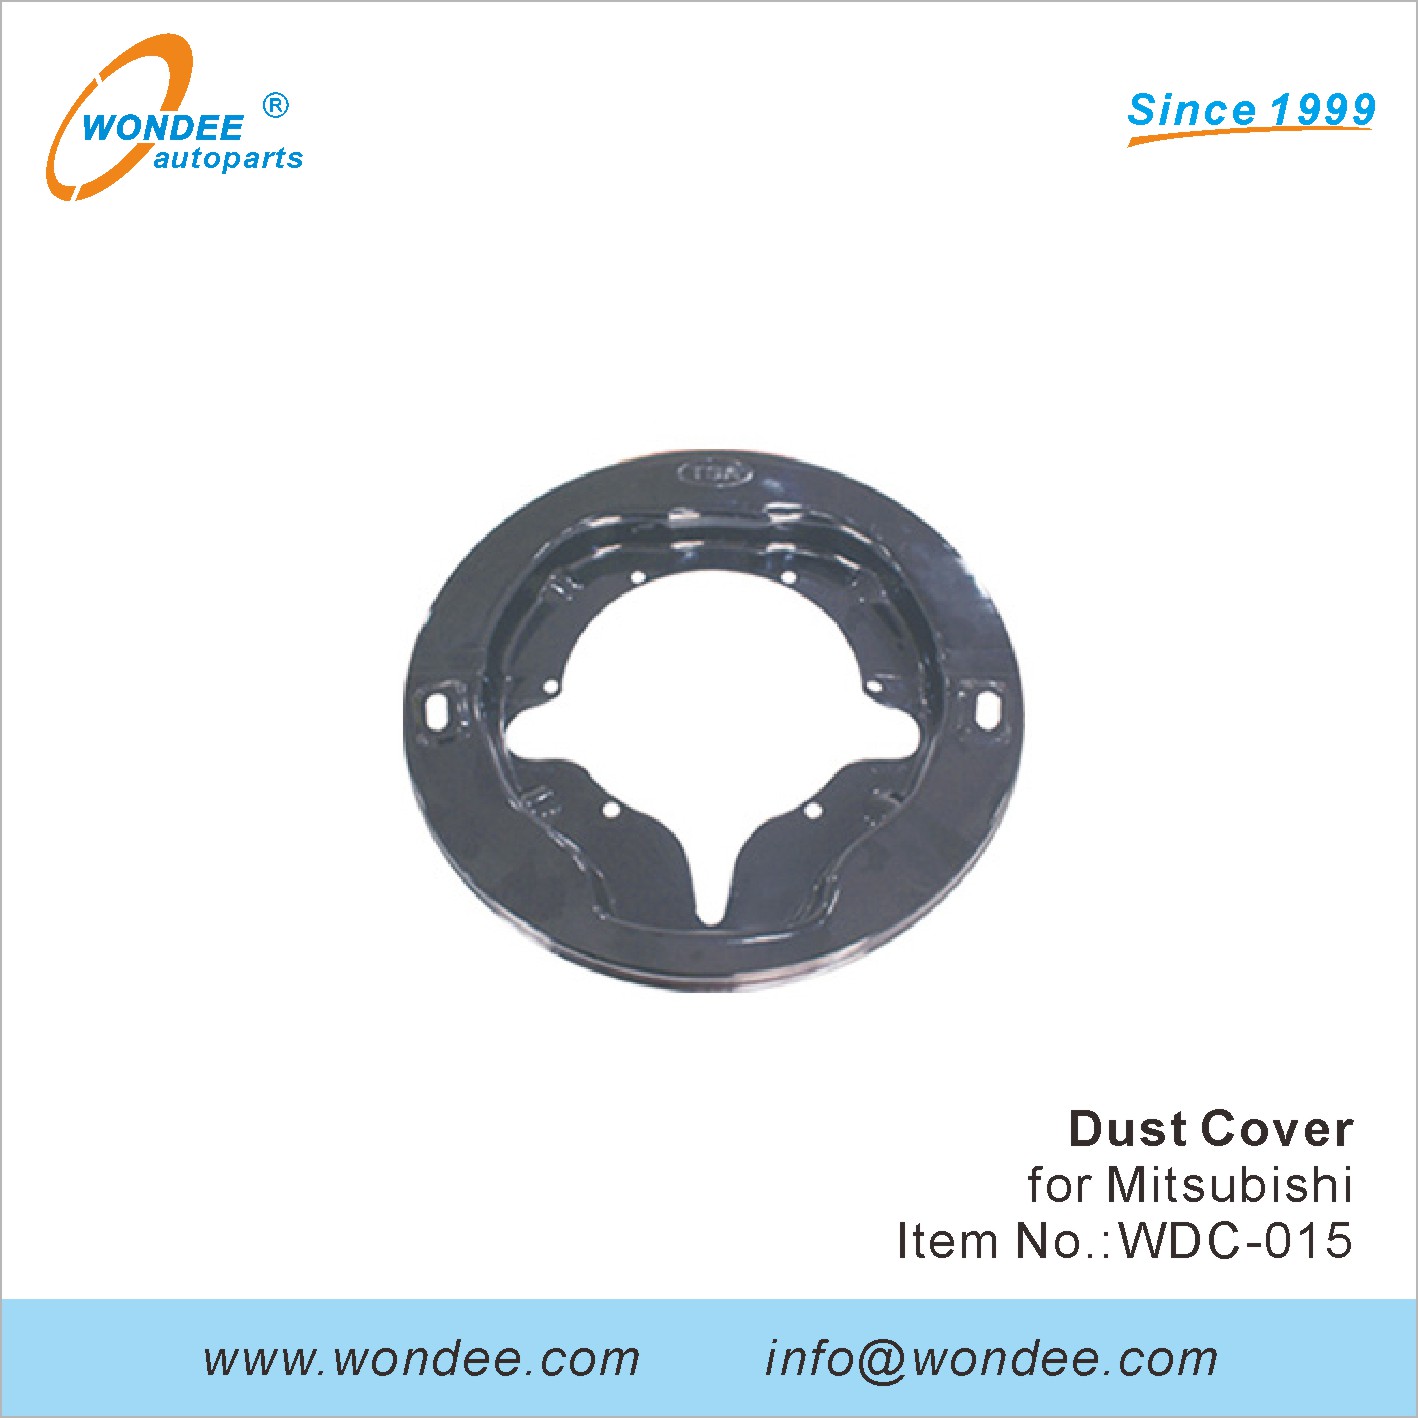 WONDEE dust cover (15)